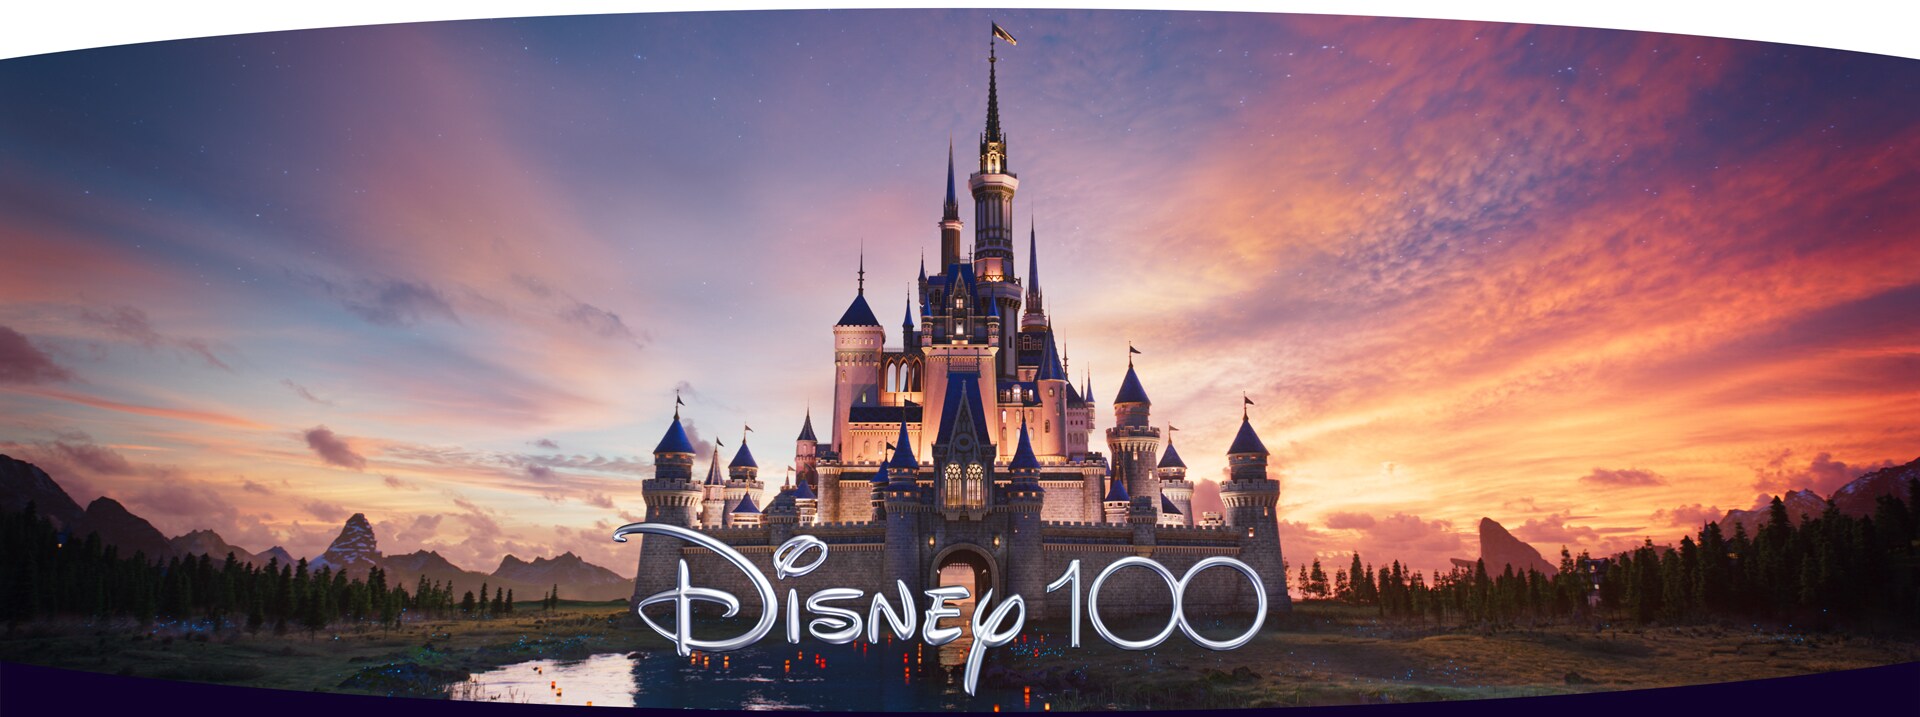 Disney100 Sub Page Banner